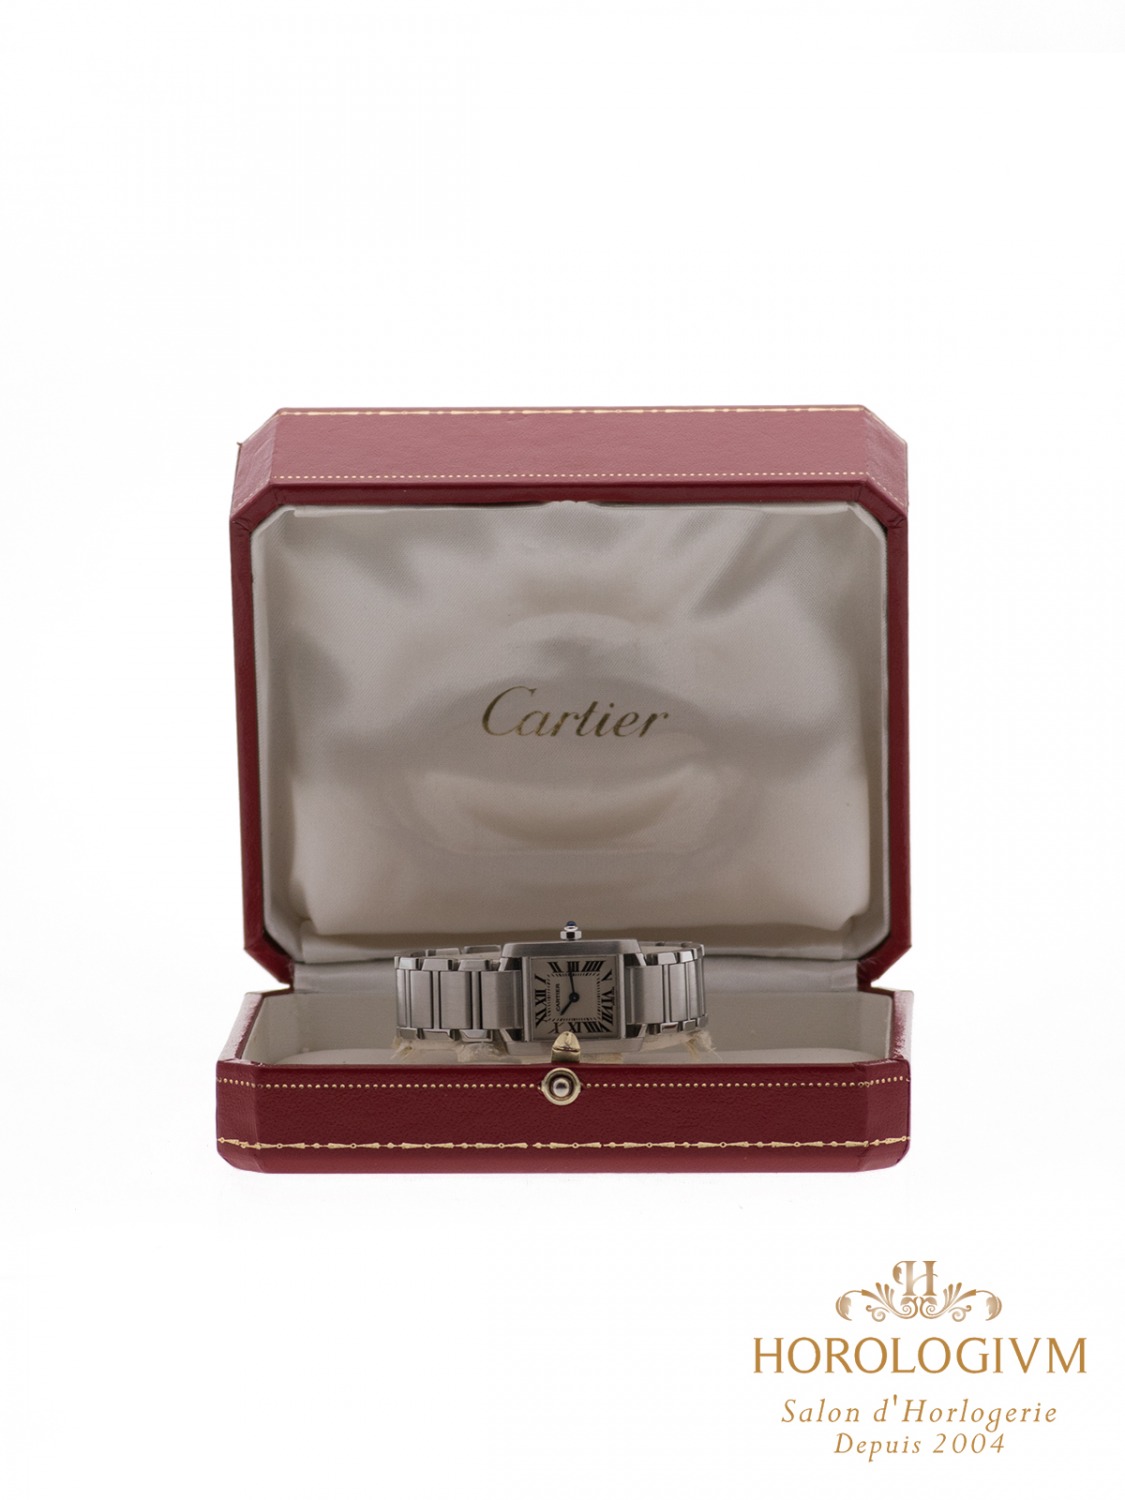 Cartier Tank Française Ref. 2384 Small Size watch, silver